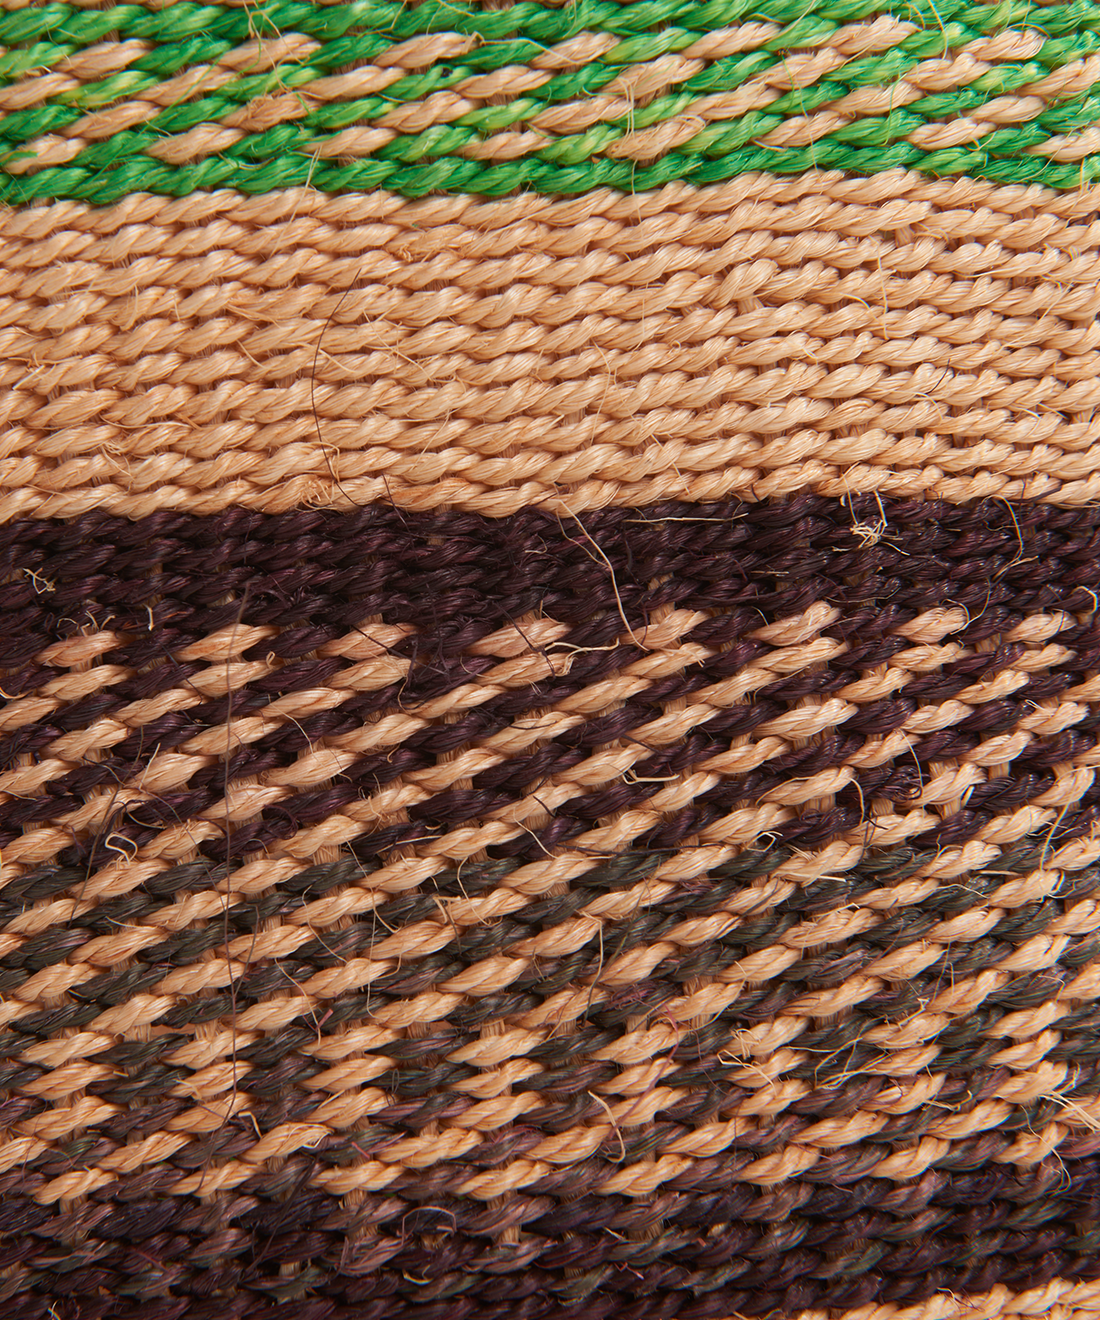 Medium Practical Weave Basket, 4